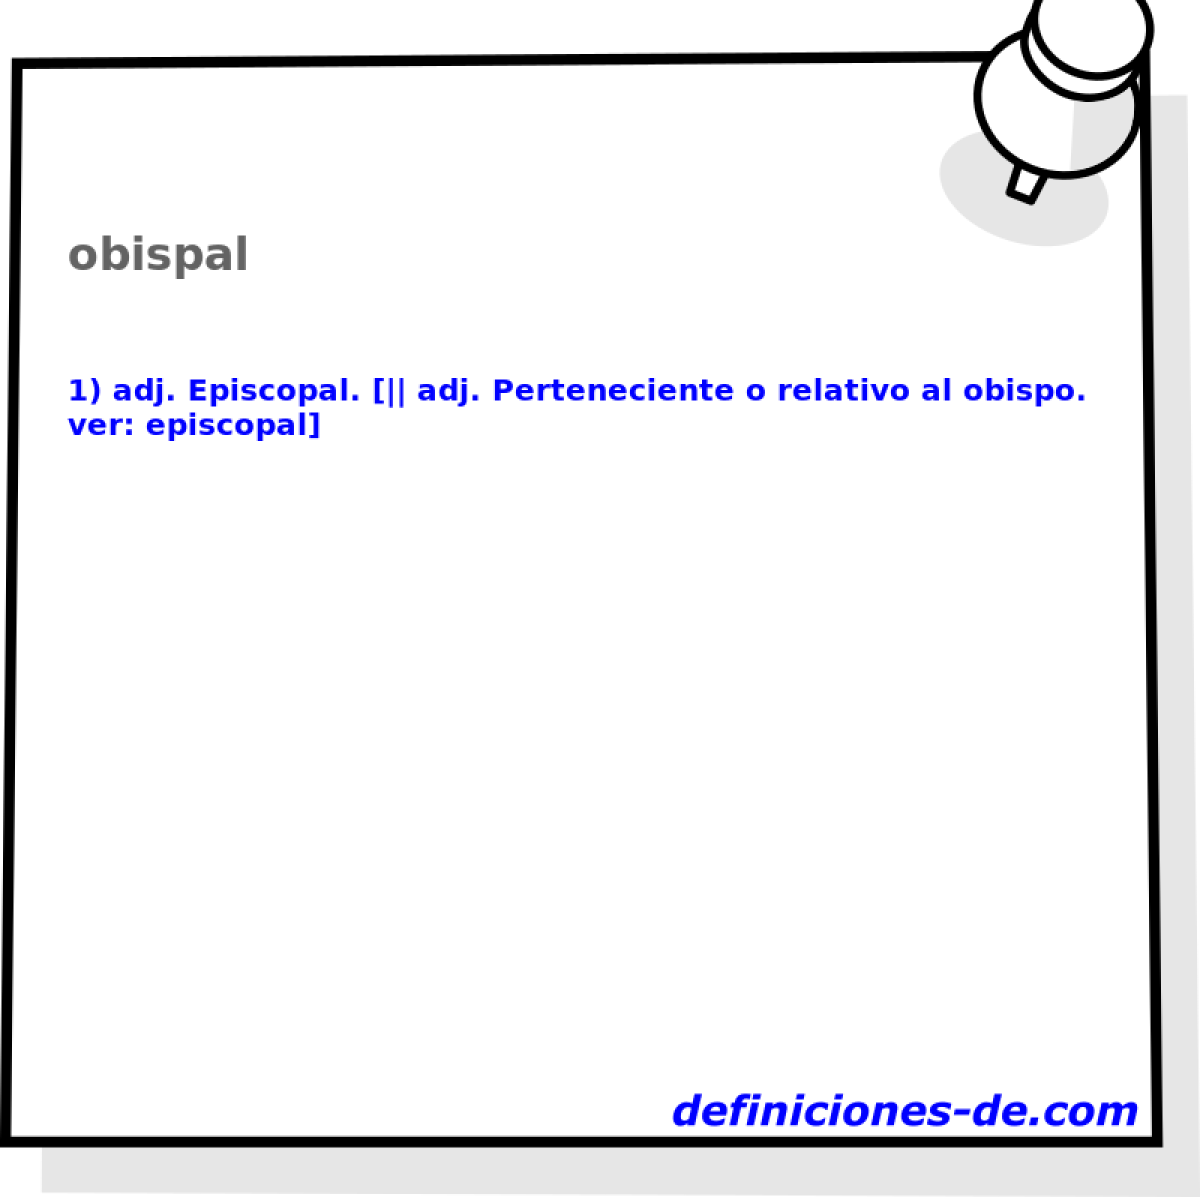 obispal 